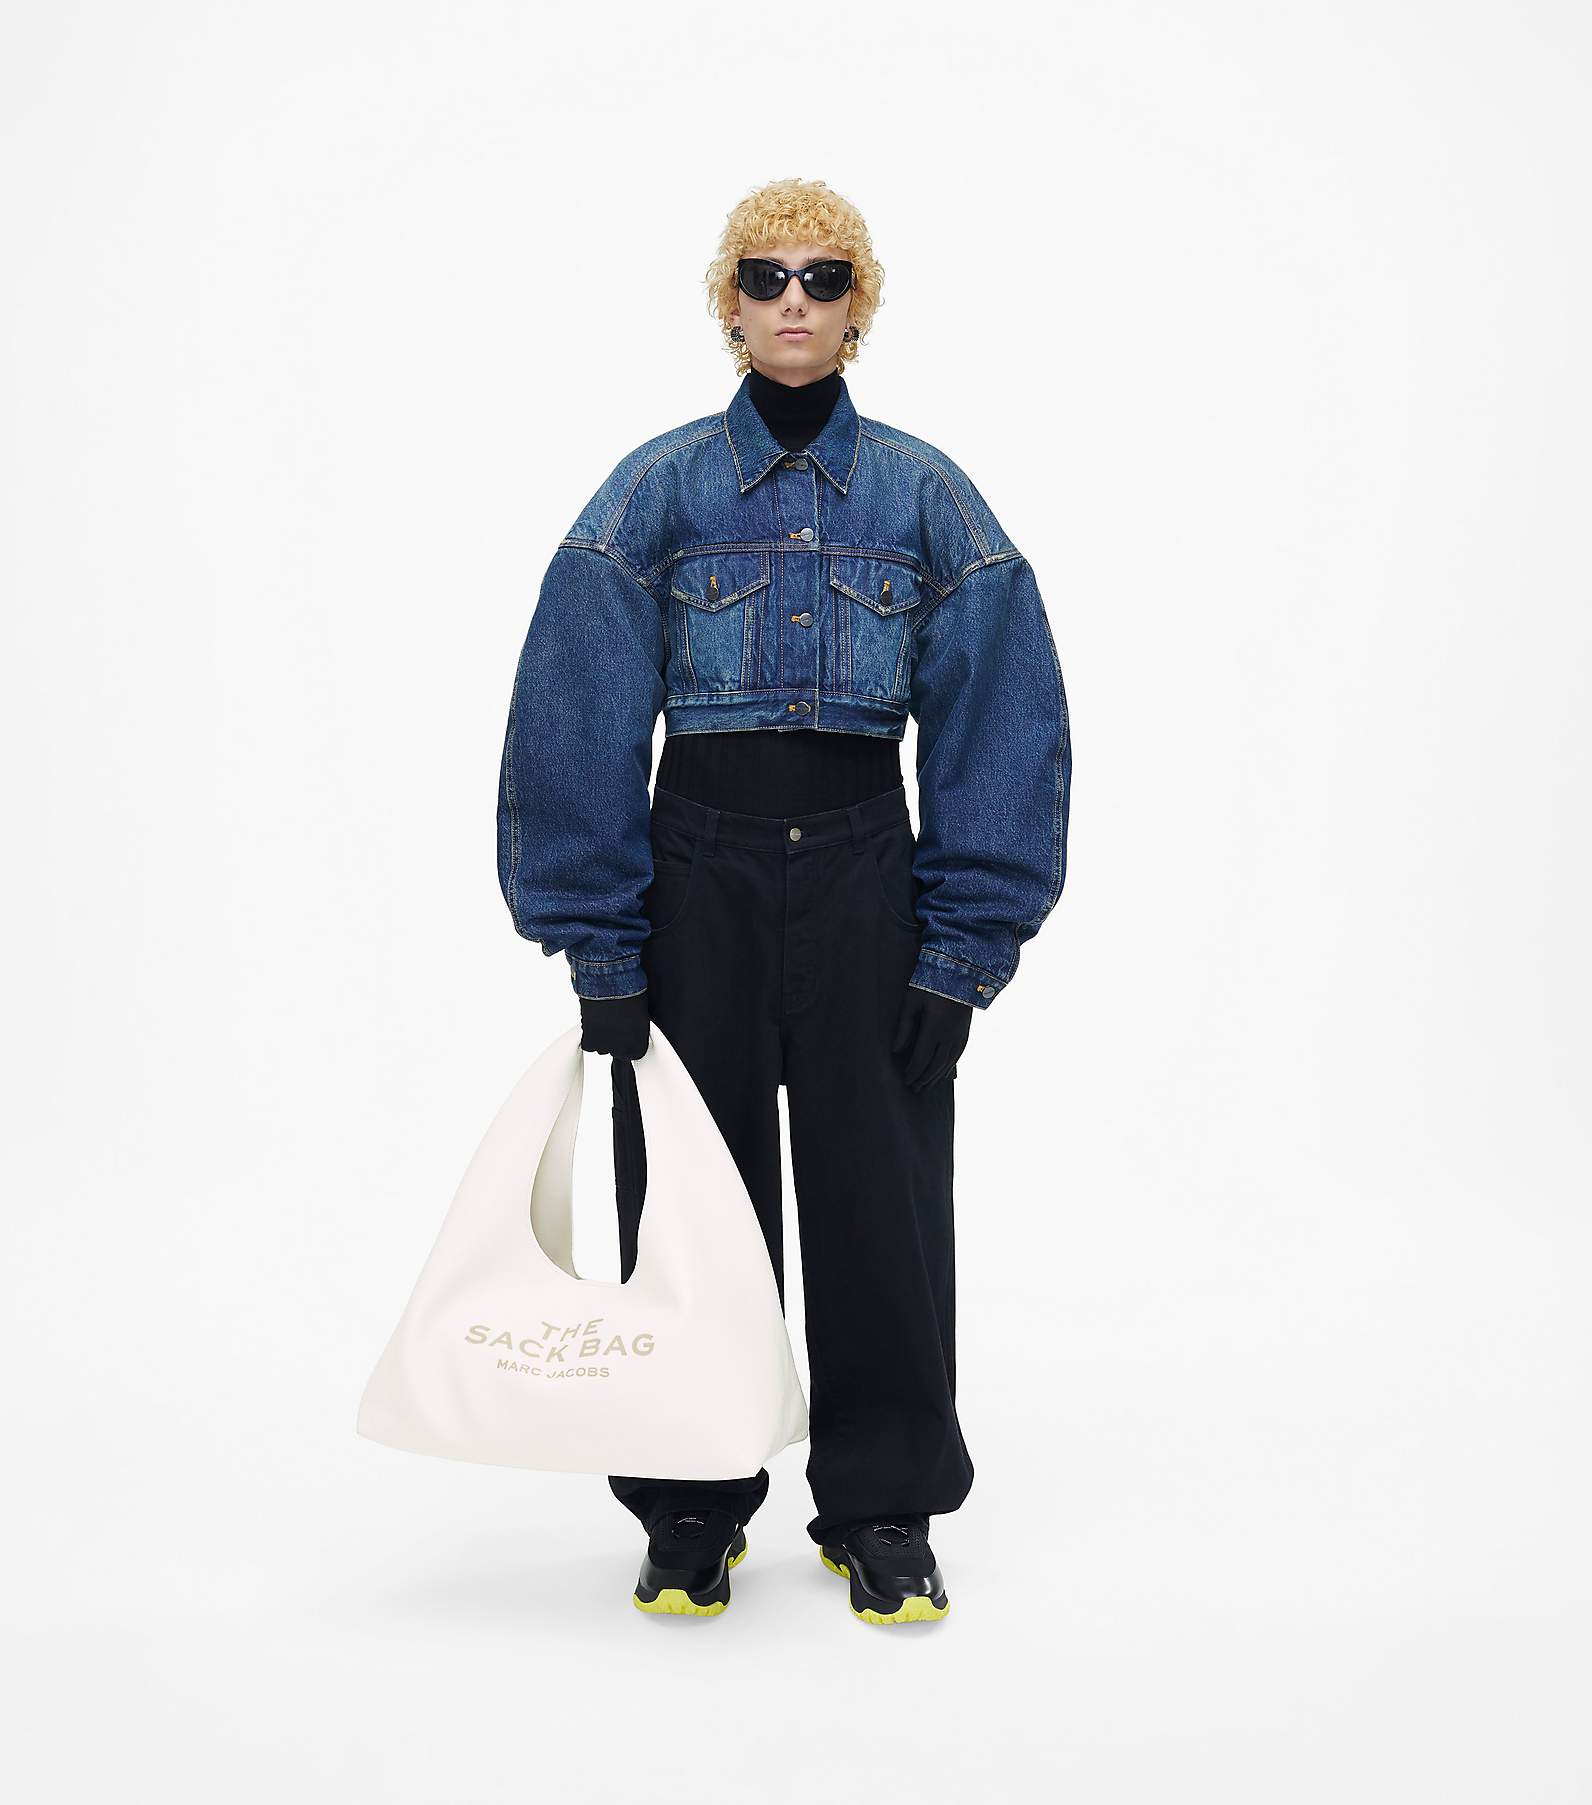 The XL Sack Bag | Marc Jacobs | Official Site